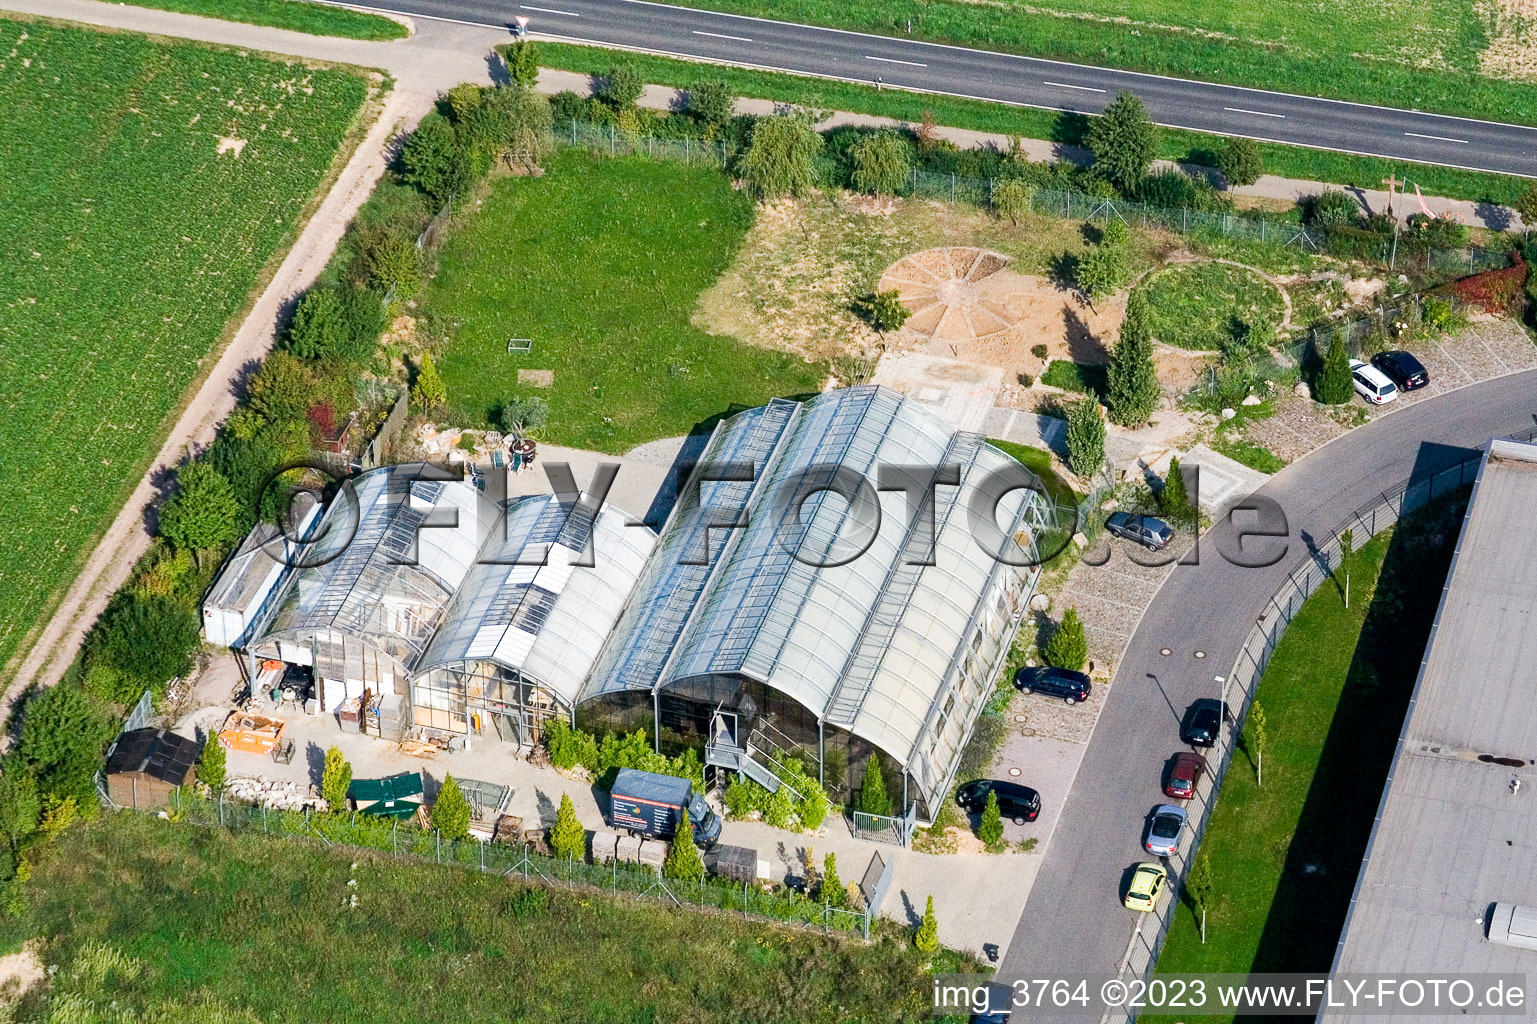 Aerial view of Industrial area W in the district Herxheim in Herxheim bei Landau/Pfalz in the state Rhineland-Palatinate, Germany